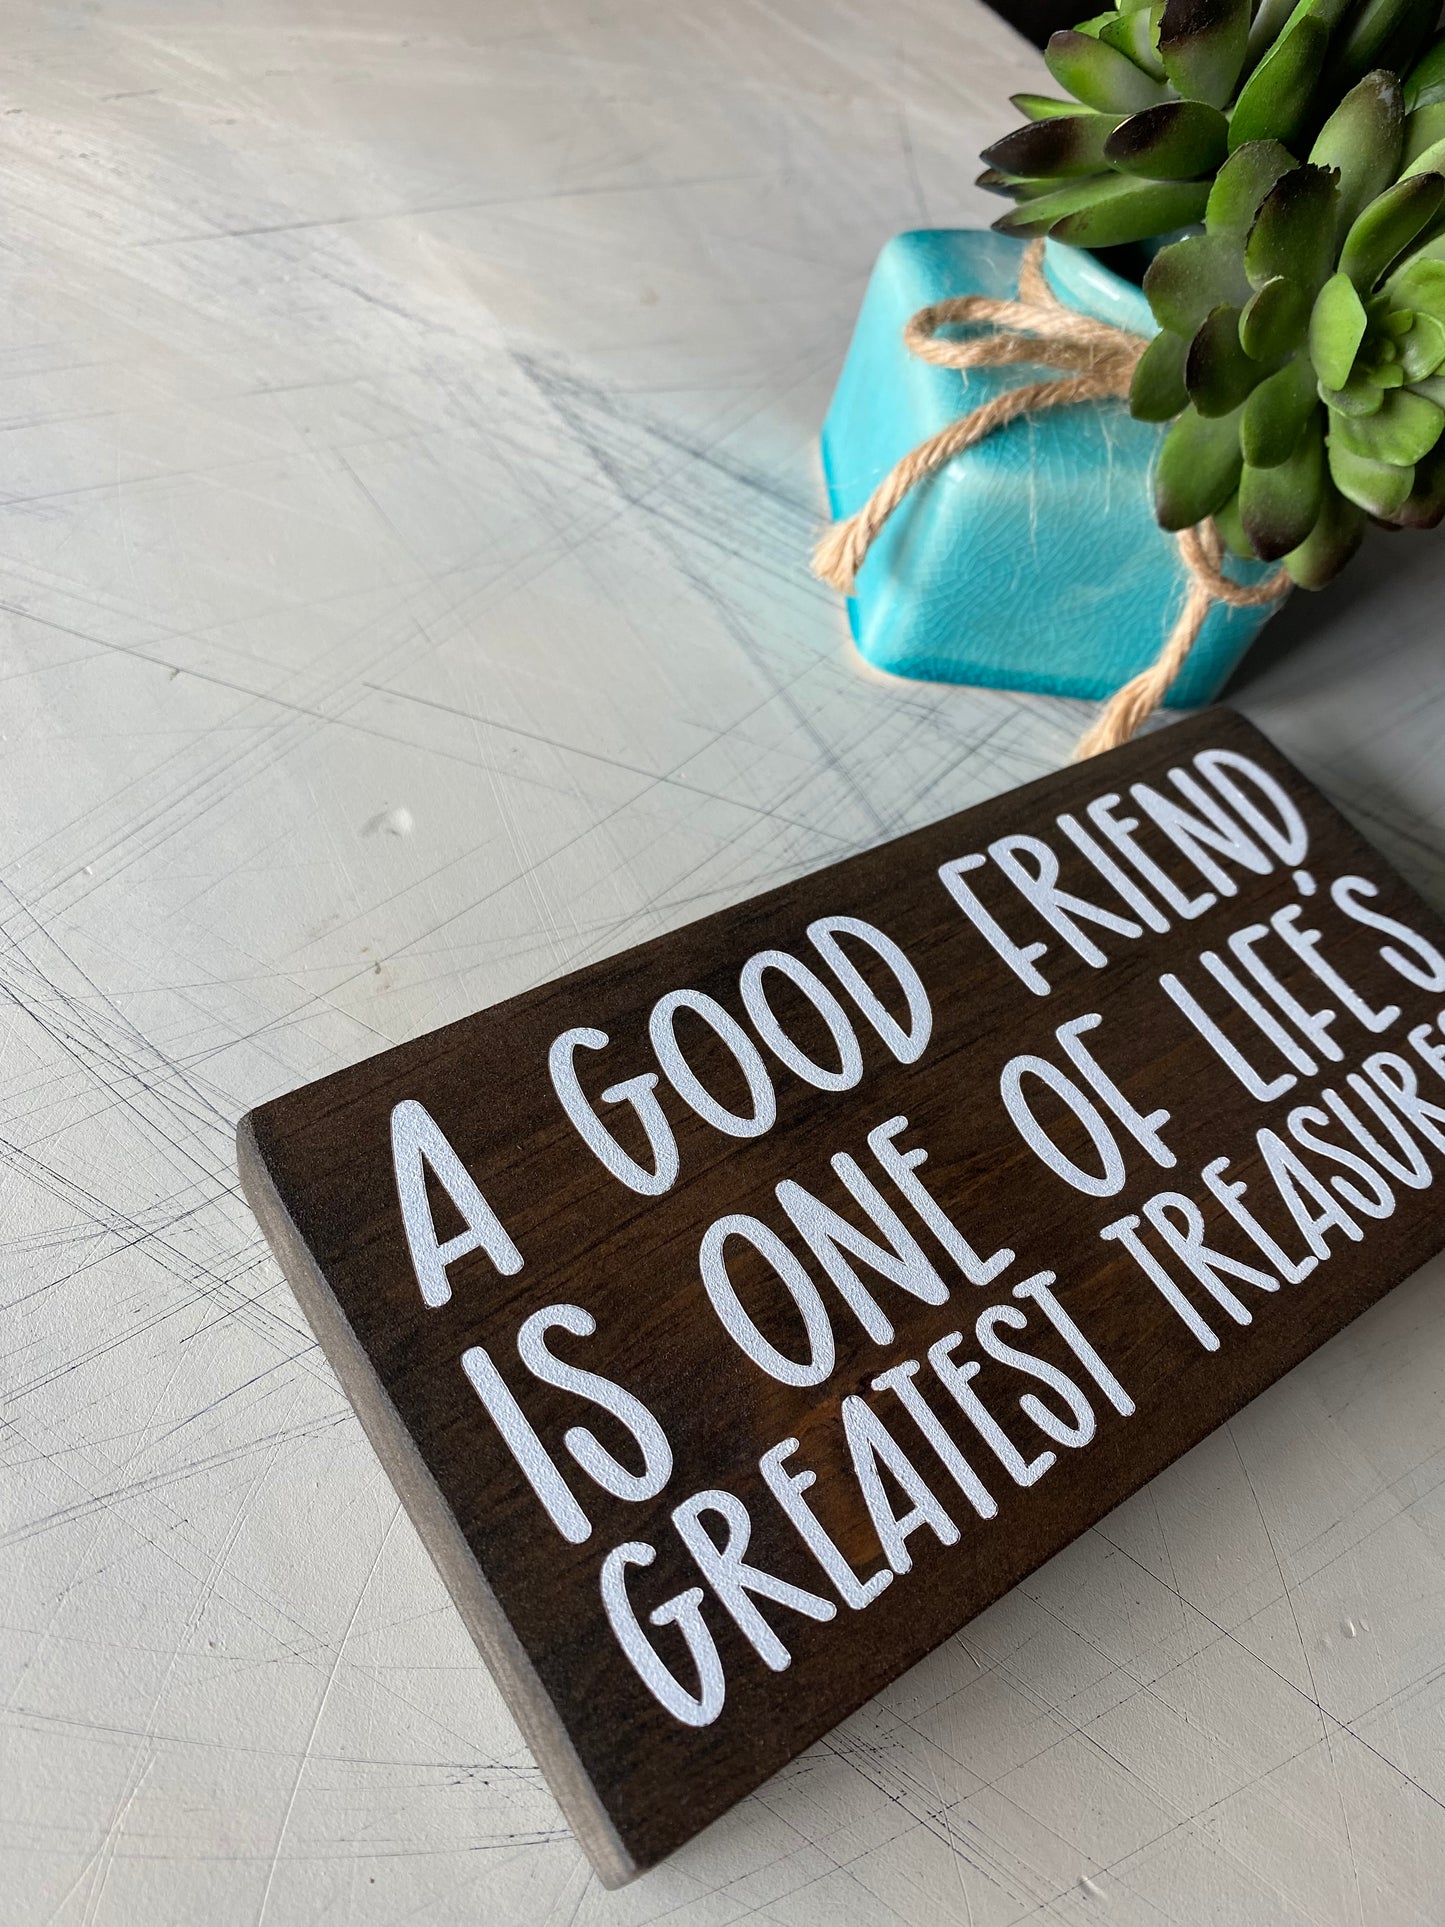 A good friend is one of life's greatest treasures. - Novotny Designs handmade mini wood sign